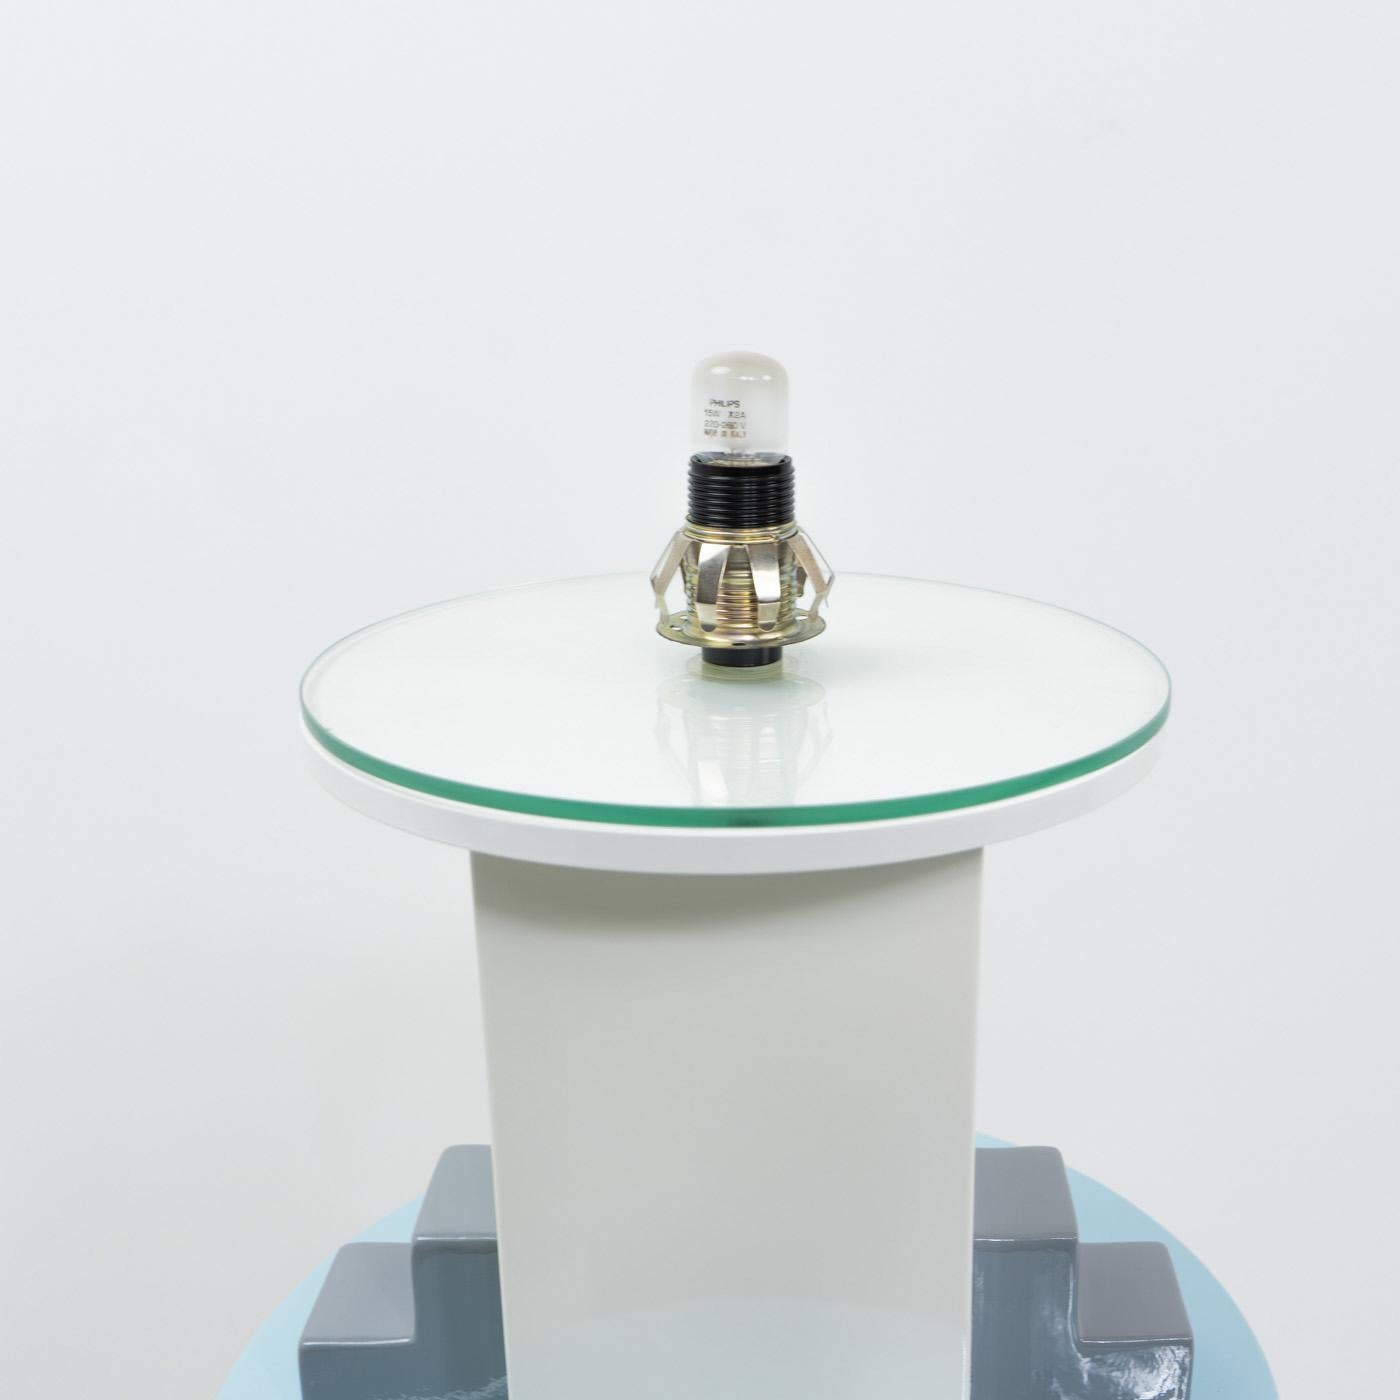 Italian Postmodern Aldo Cibic Table Lamp, Memphis-Milano -1980s For Sale 4